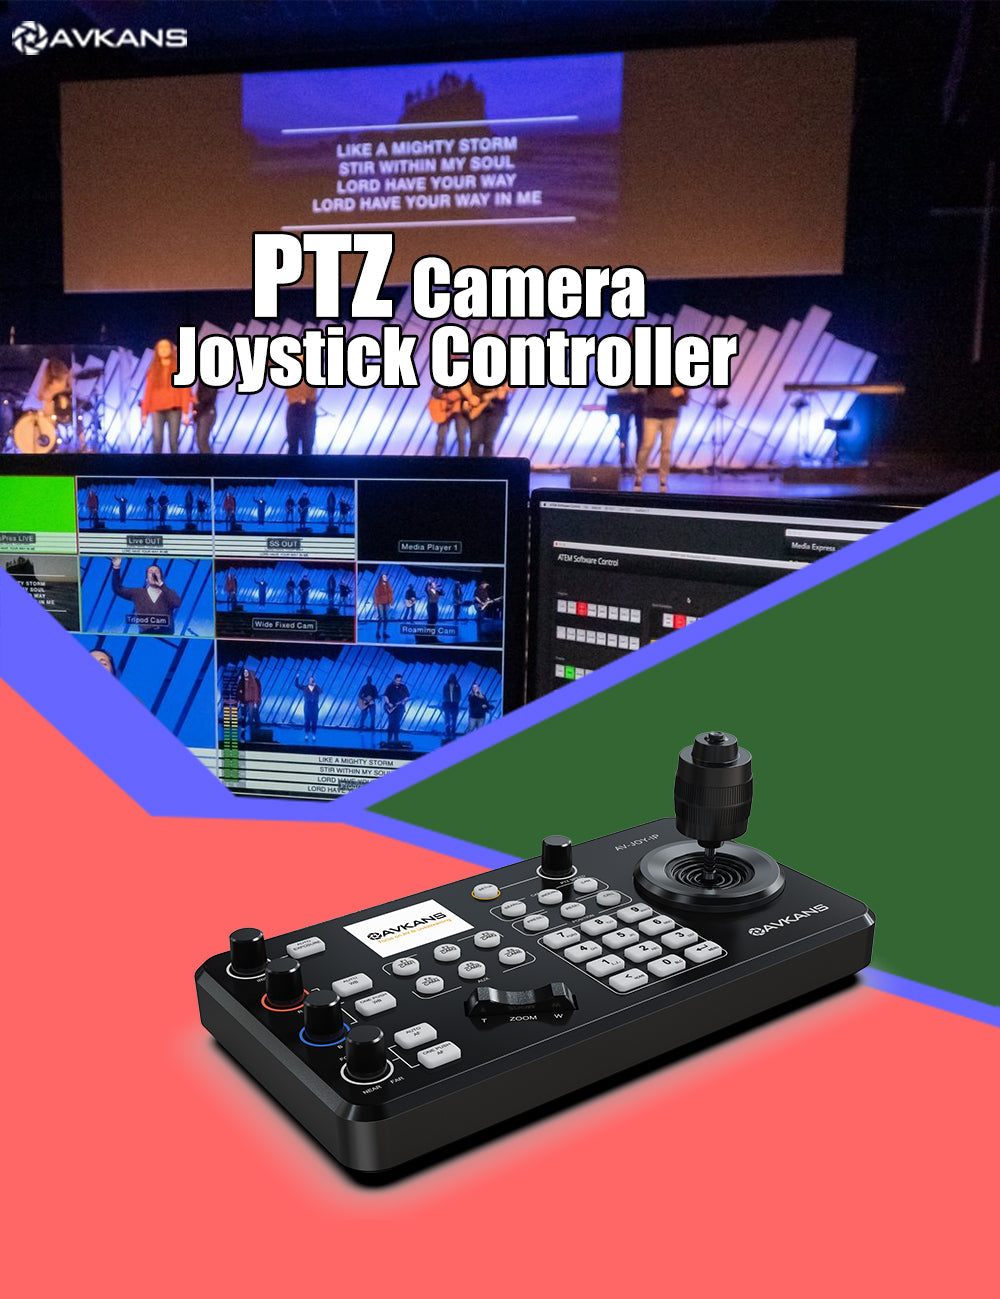 AVKANS USED Super PTZ Camera Joystick Controller, NDI Camera Controller  Keyboard with 4D Joystick for Live Streaming, USED JOYSTICK CONTROLLER